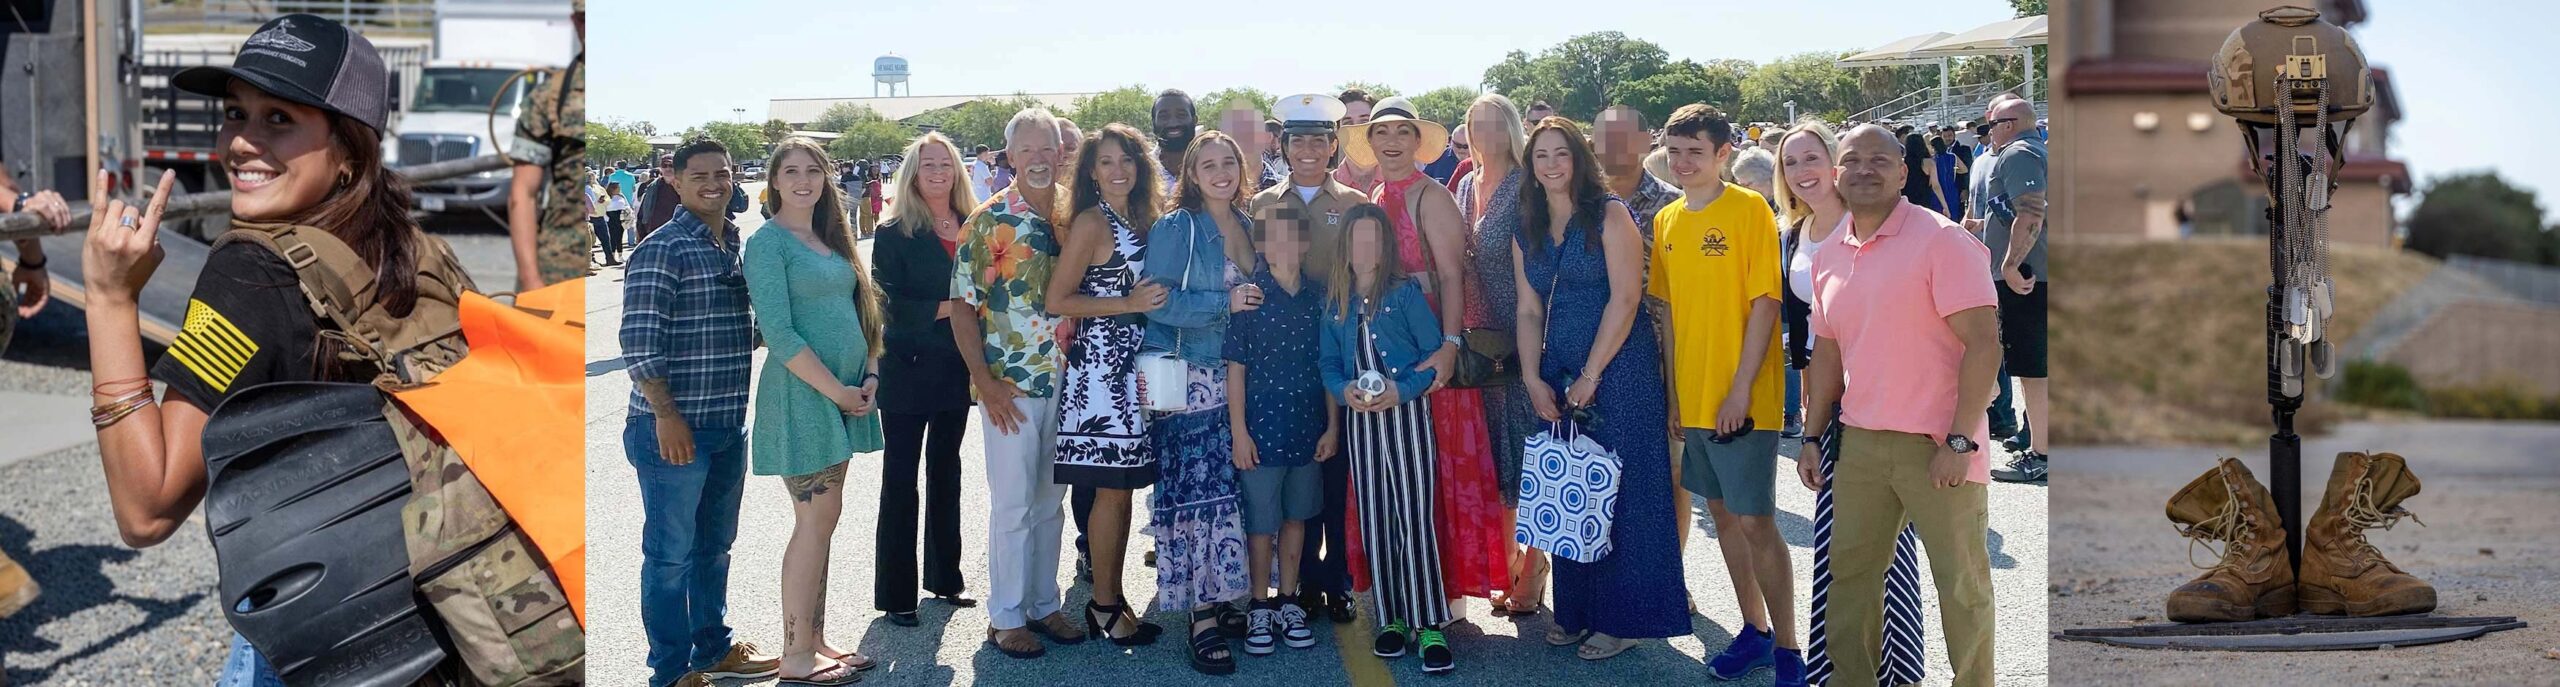 Group photograph of a graduation